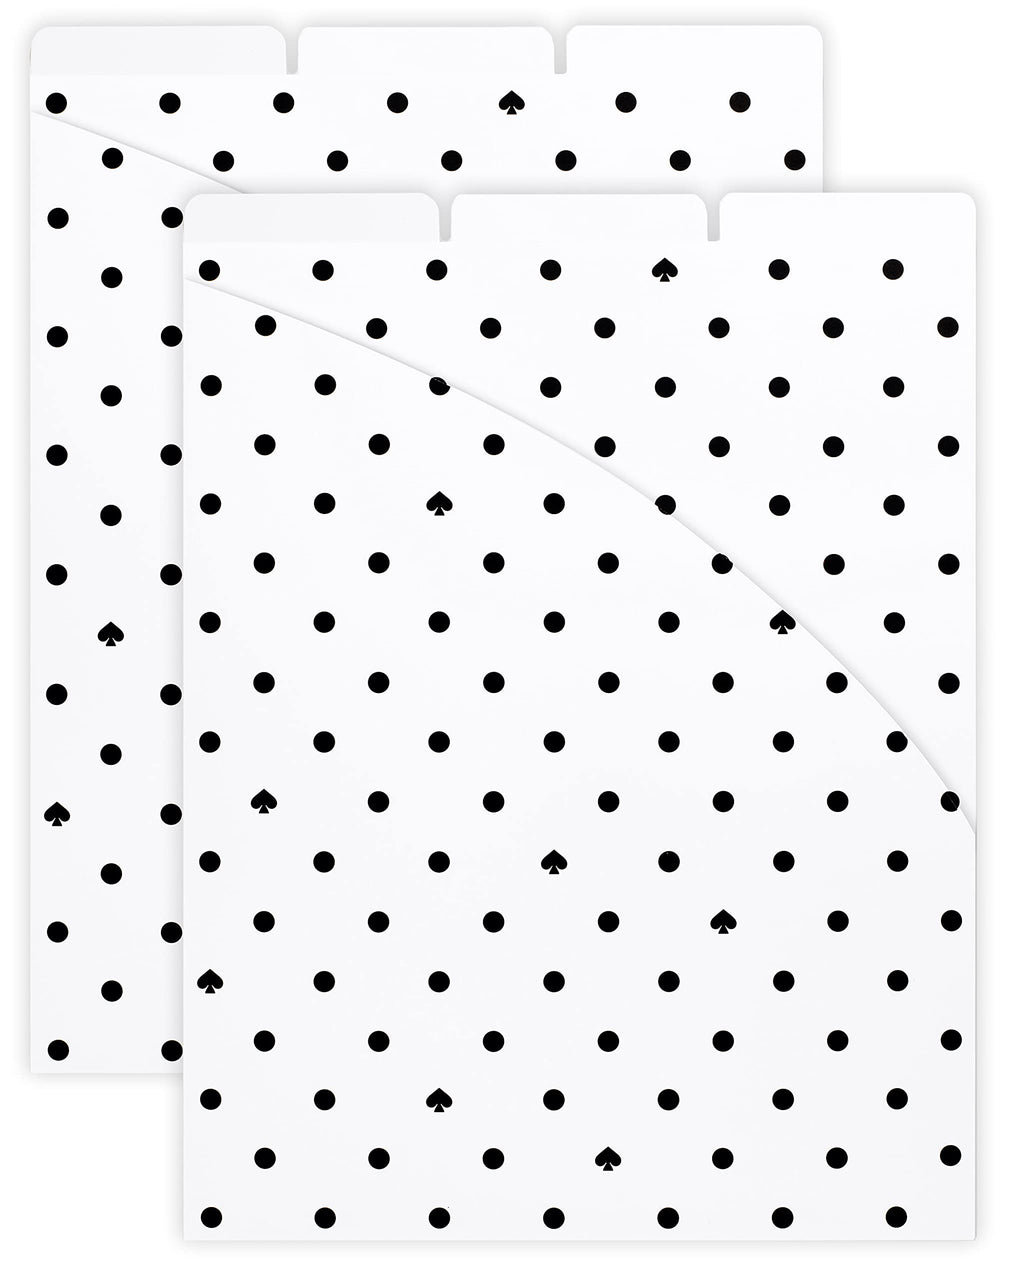 Kate Spade New York Vertical File Folder Set of 6, Letter Size/A4 Filing Organizers with Sticker Labels, Black Spade Dot